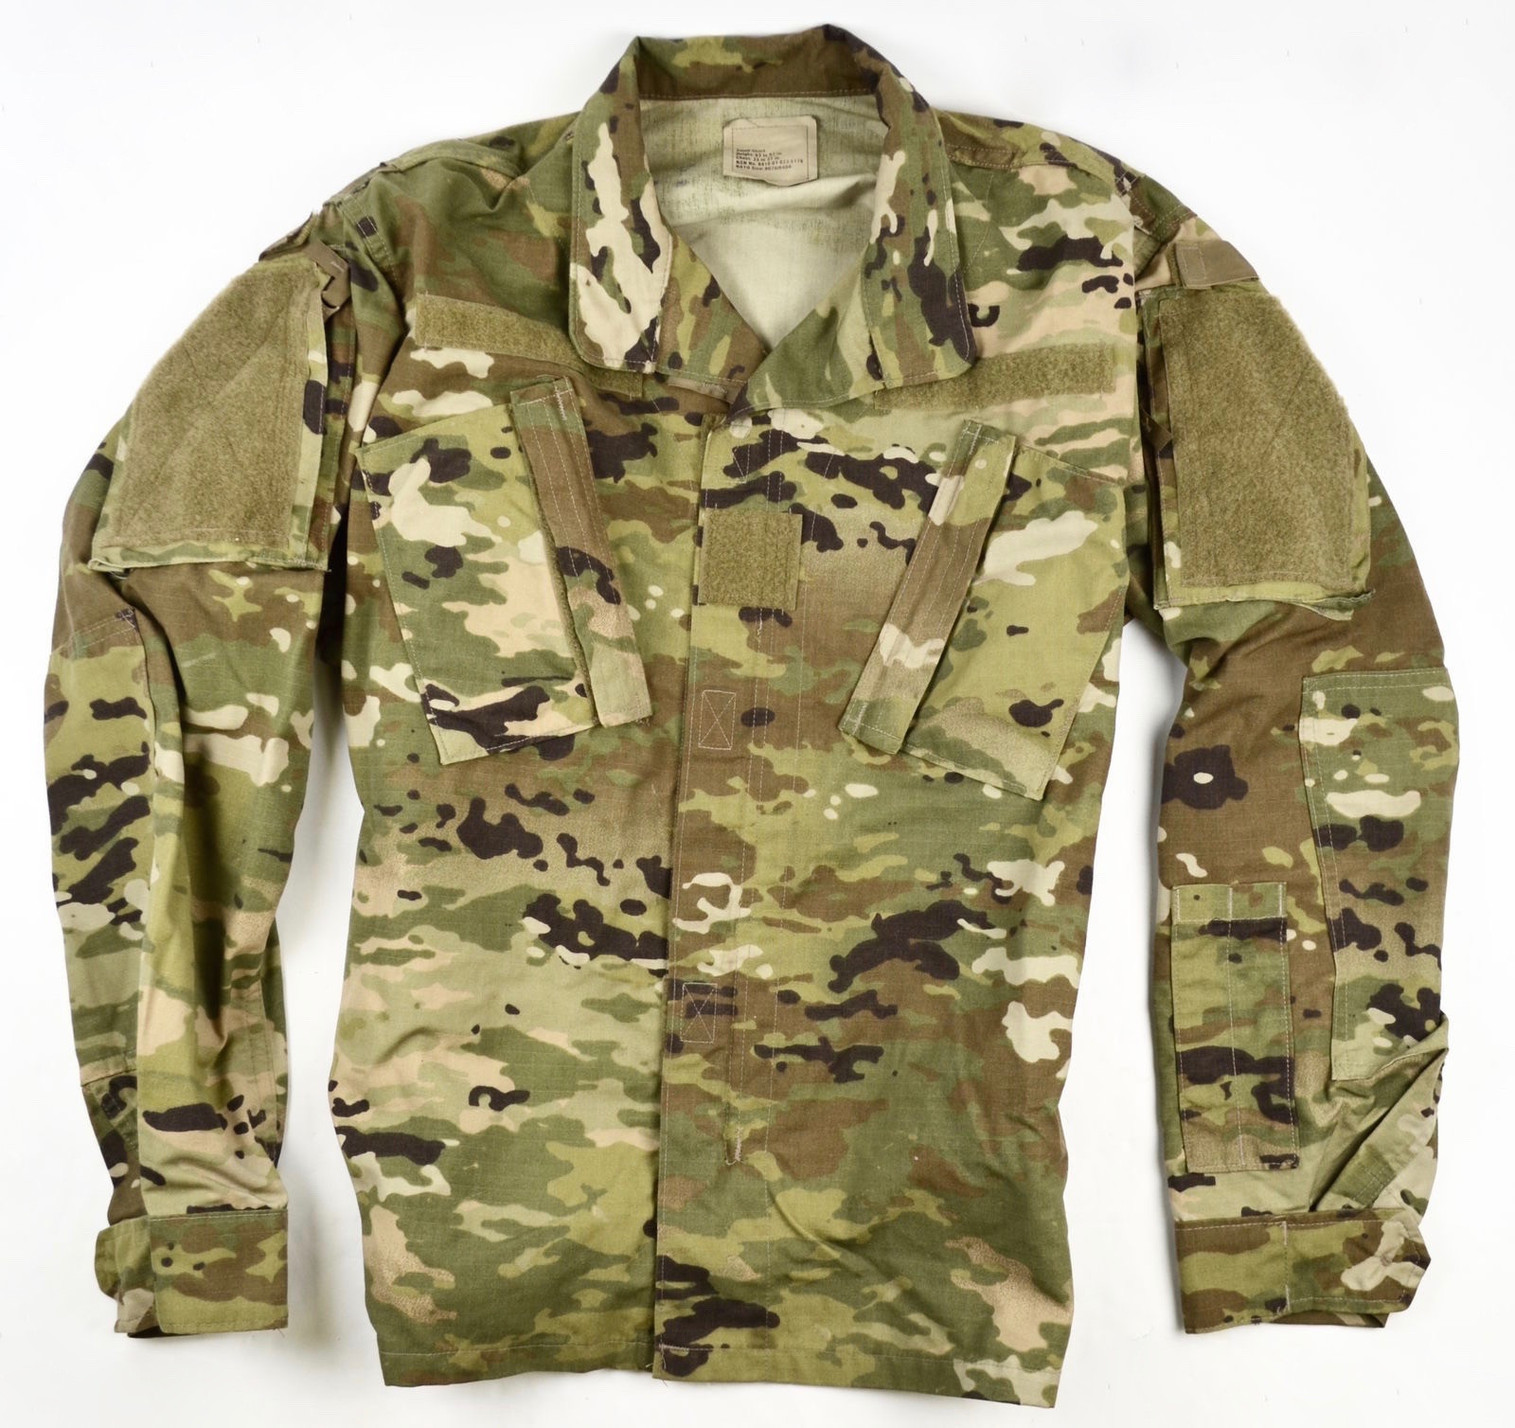 U.S Armed Forces OCP Scorpion Shirt 